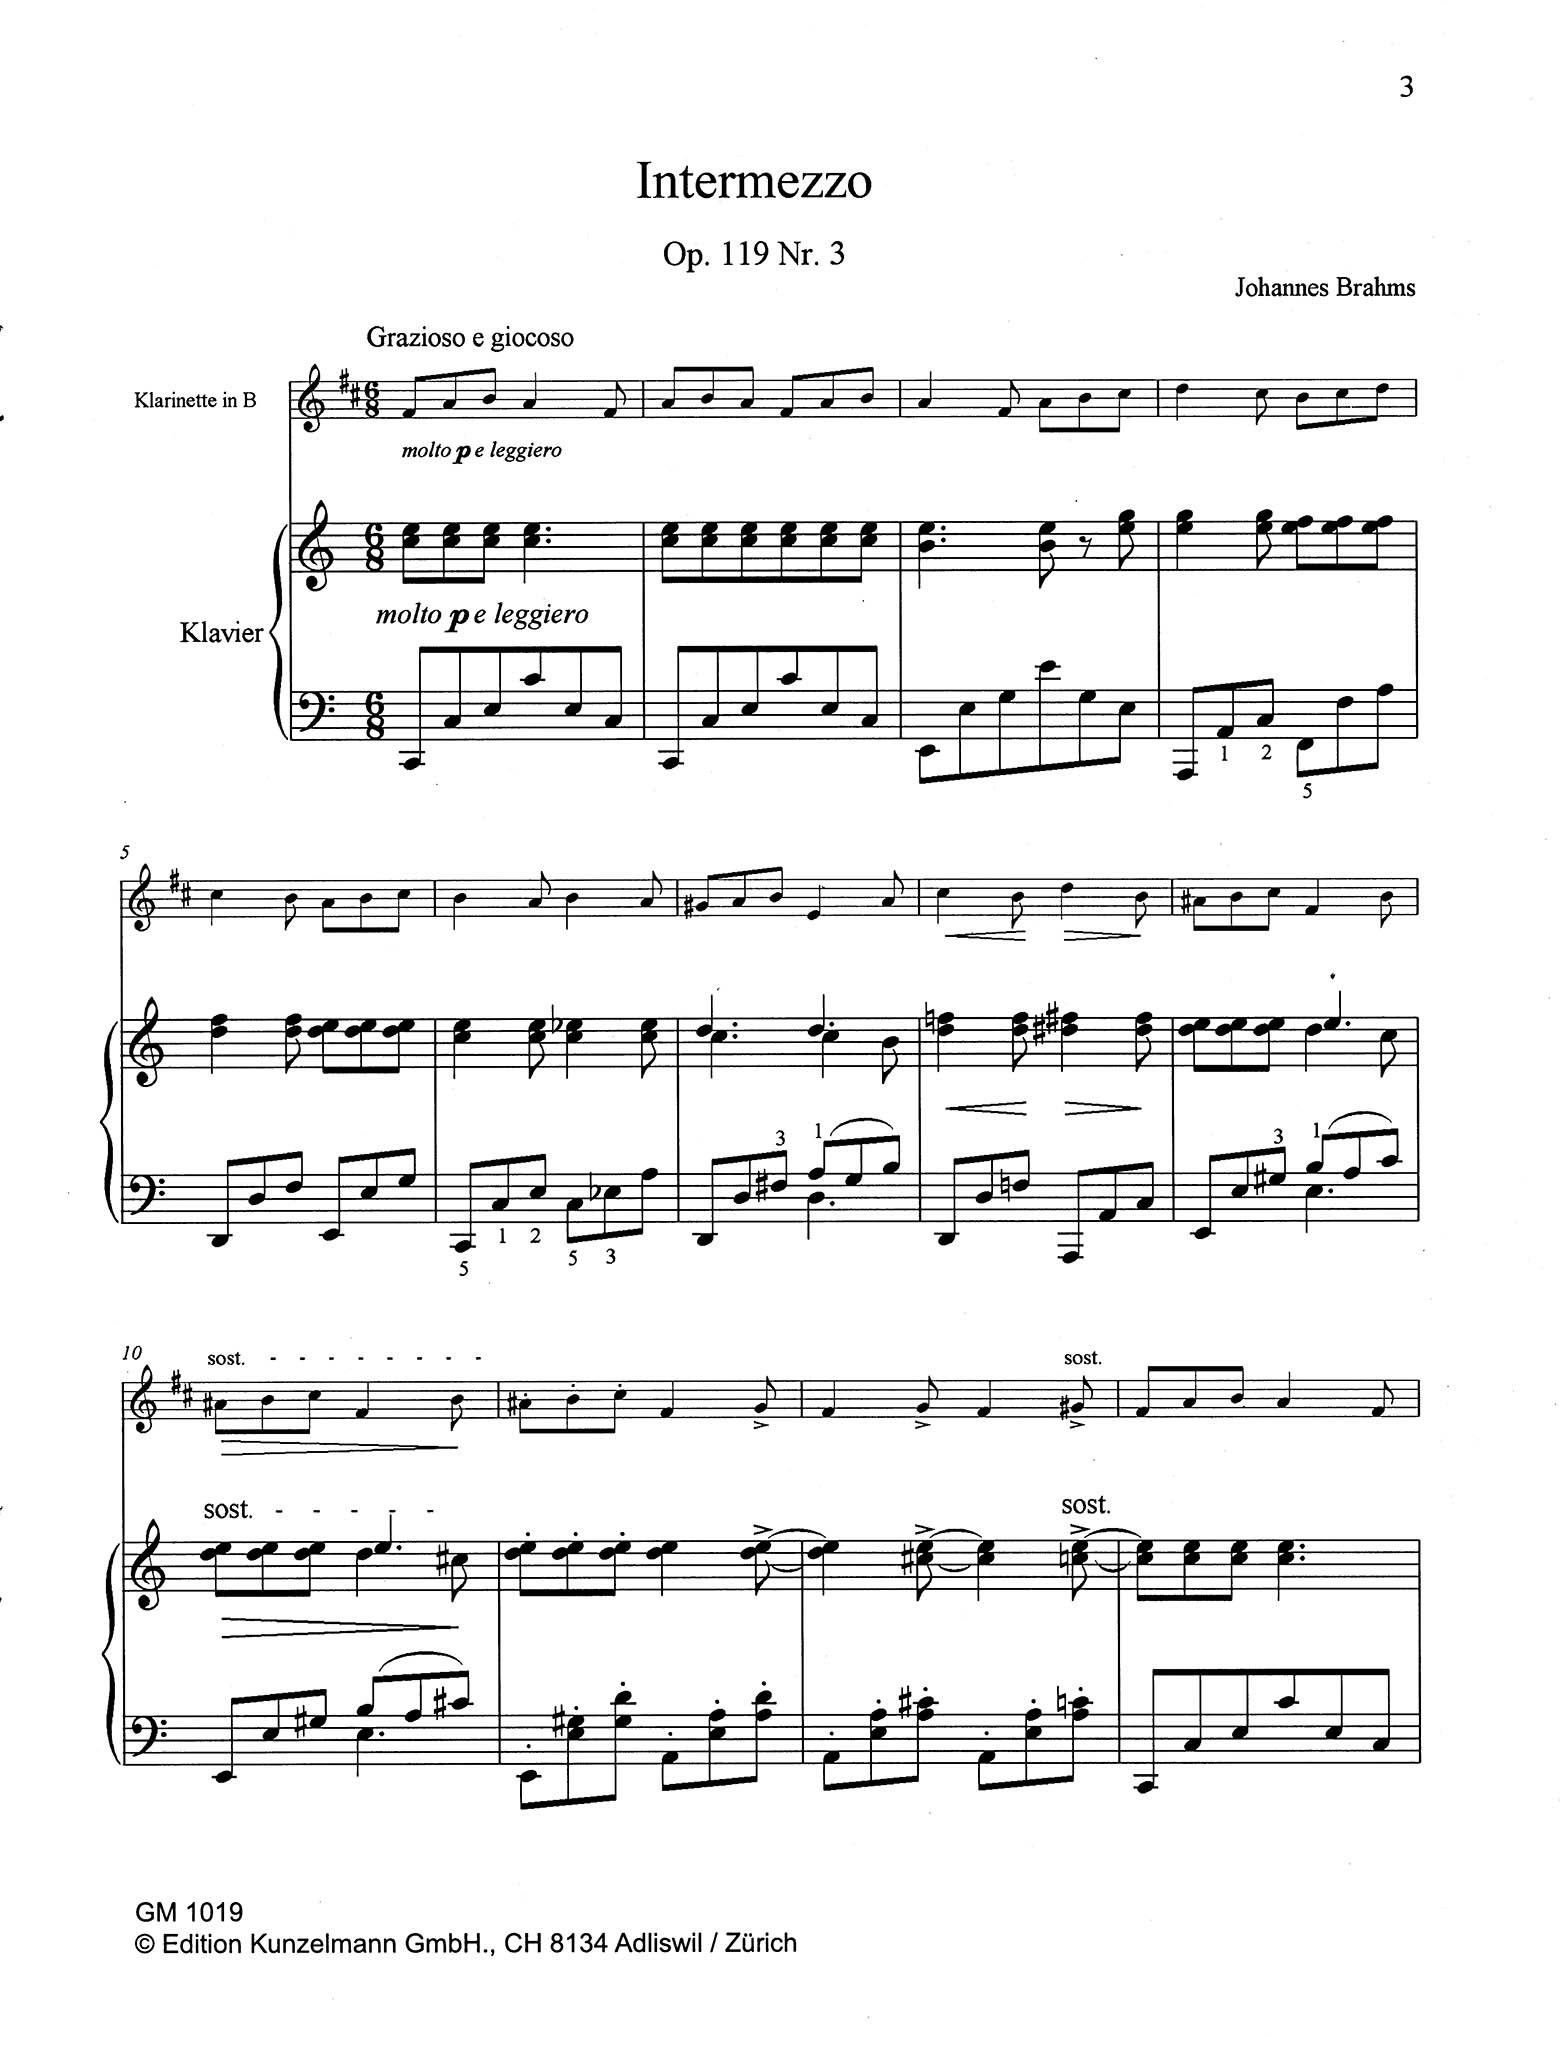 Intermezzo, Op. 119 No. 3 Score